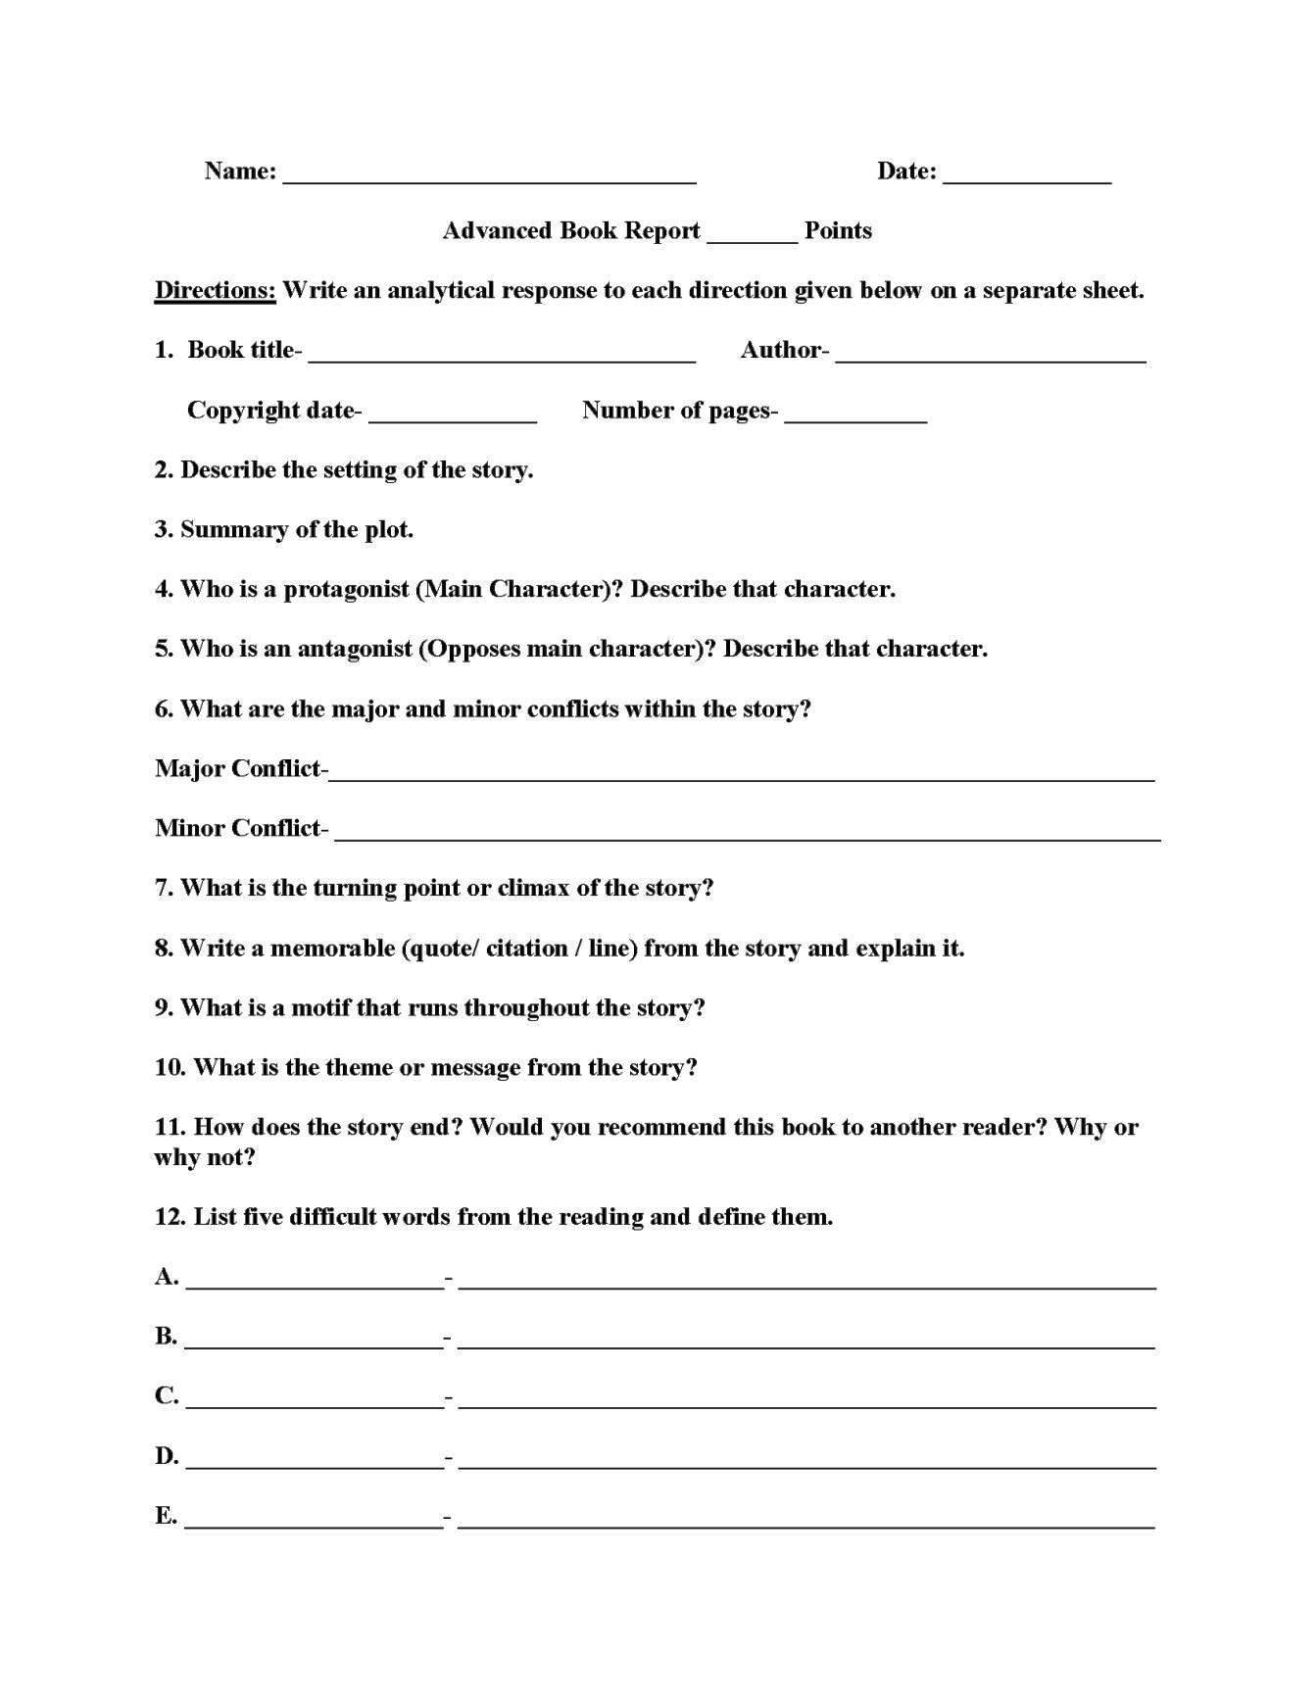 4th-grade-book-report-template-sampletemplatess-sampletemplatess